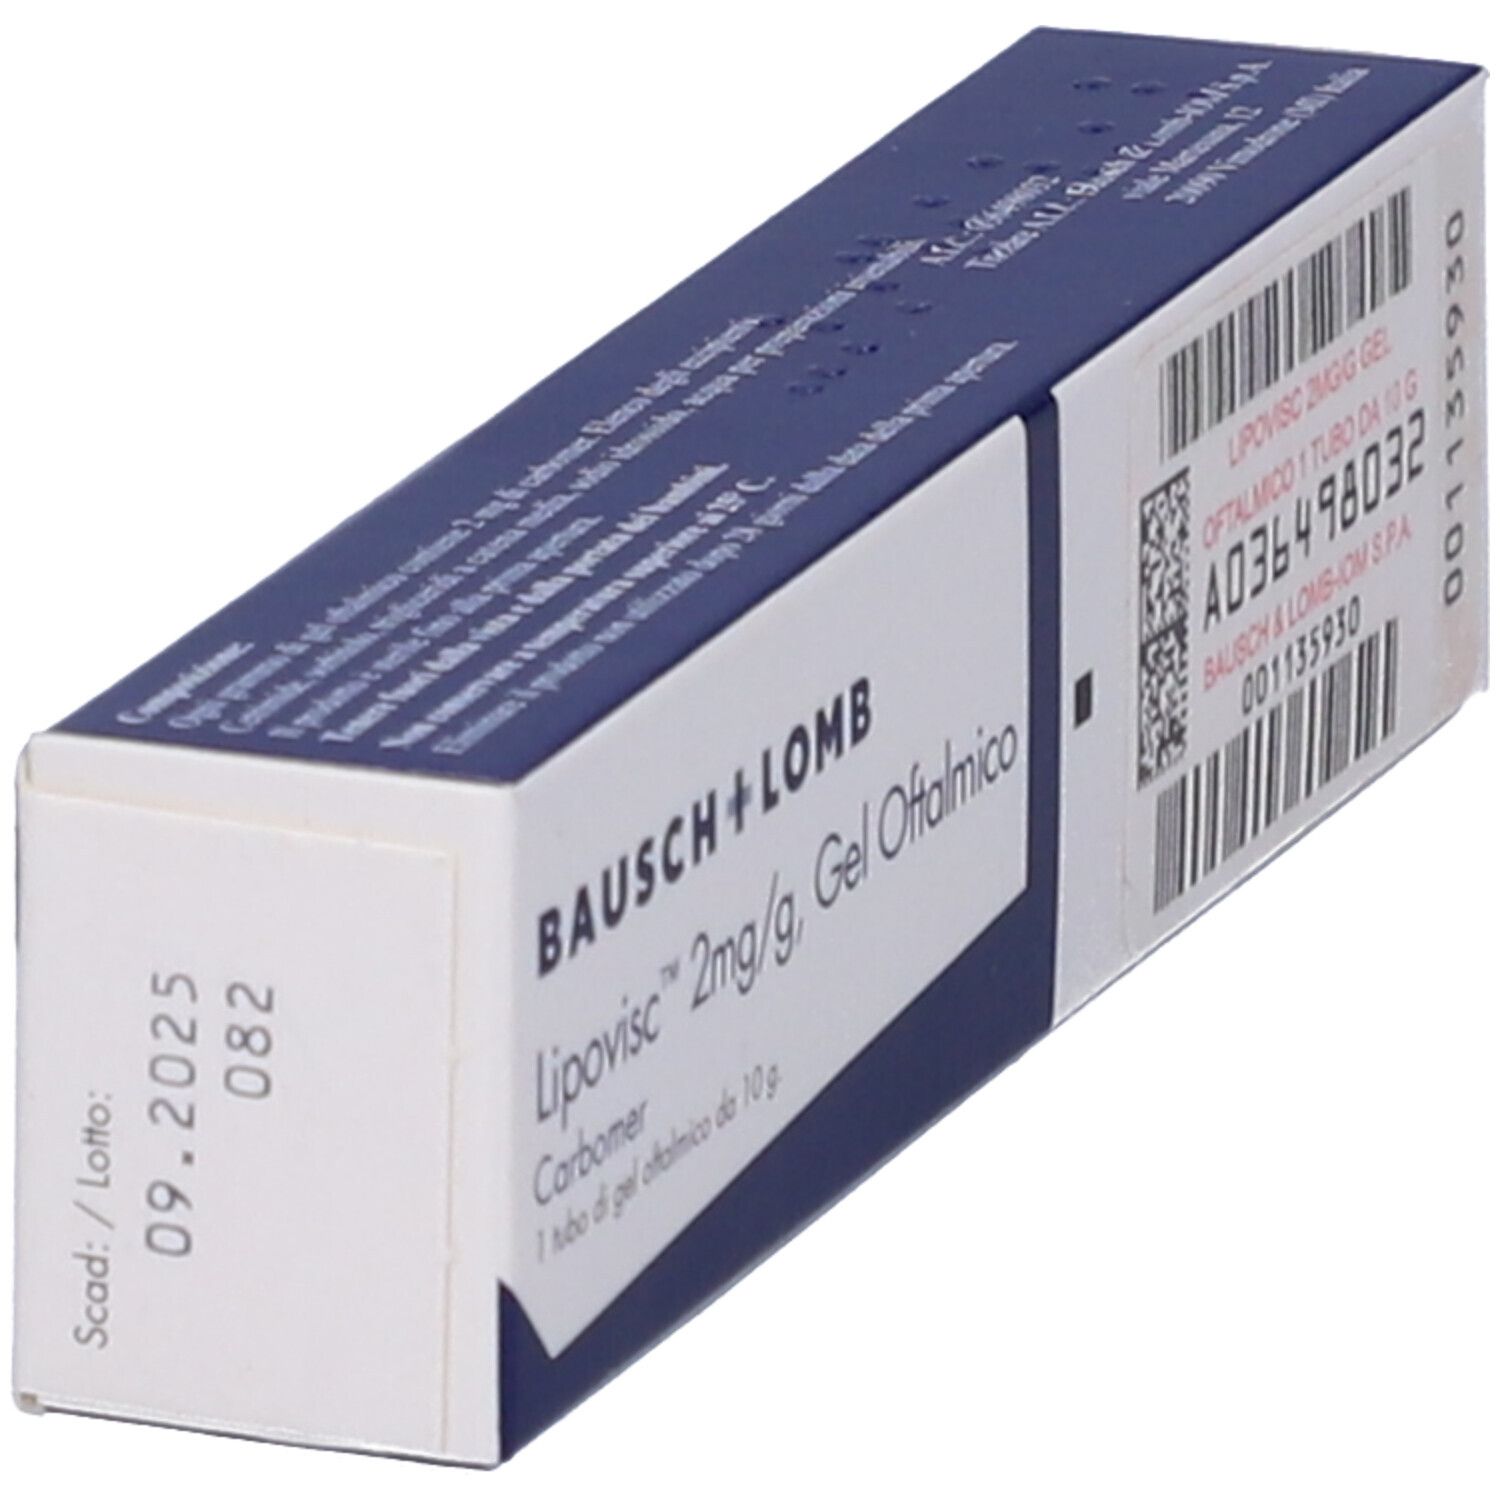 Lipovisc™ gel oftalmico